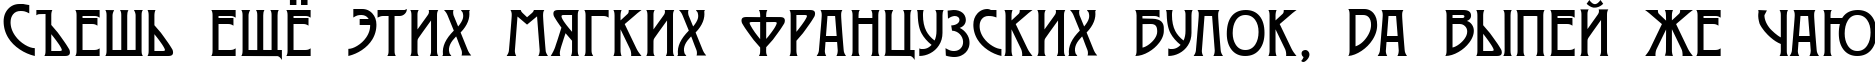 Пример написания шрифтом Moderno Two текста на русском